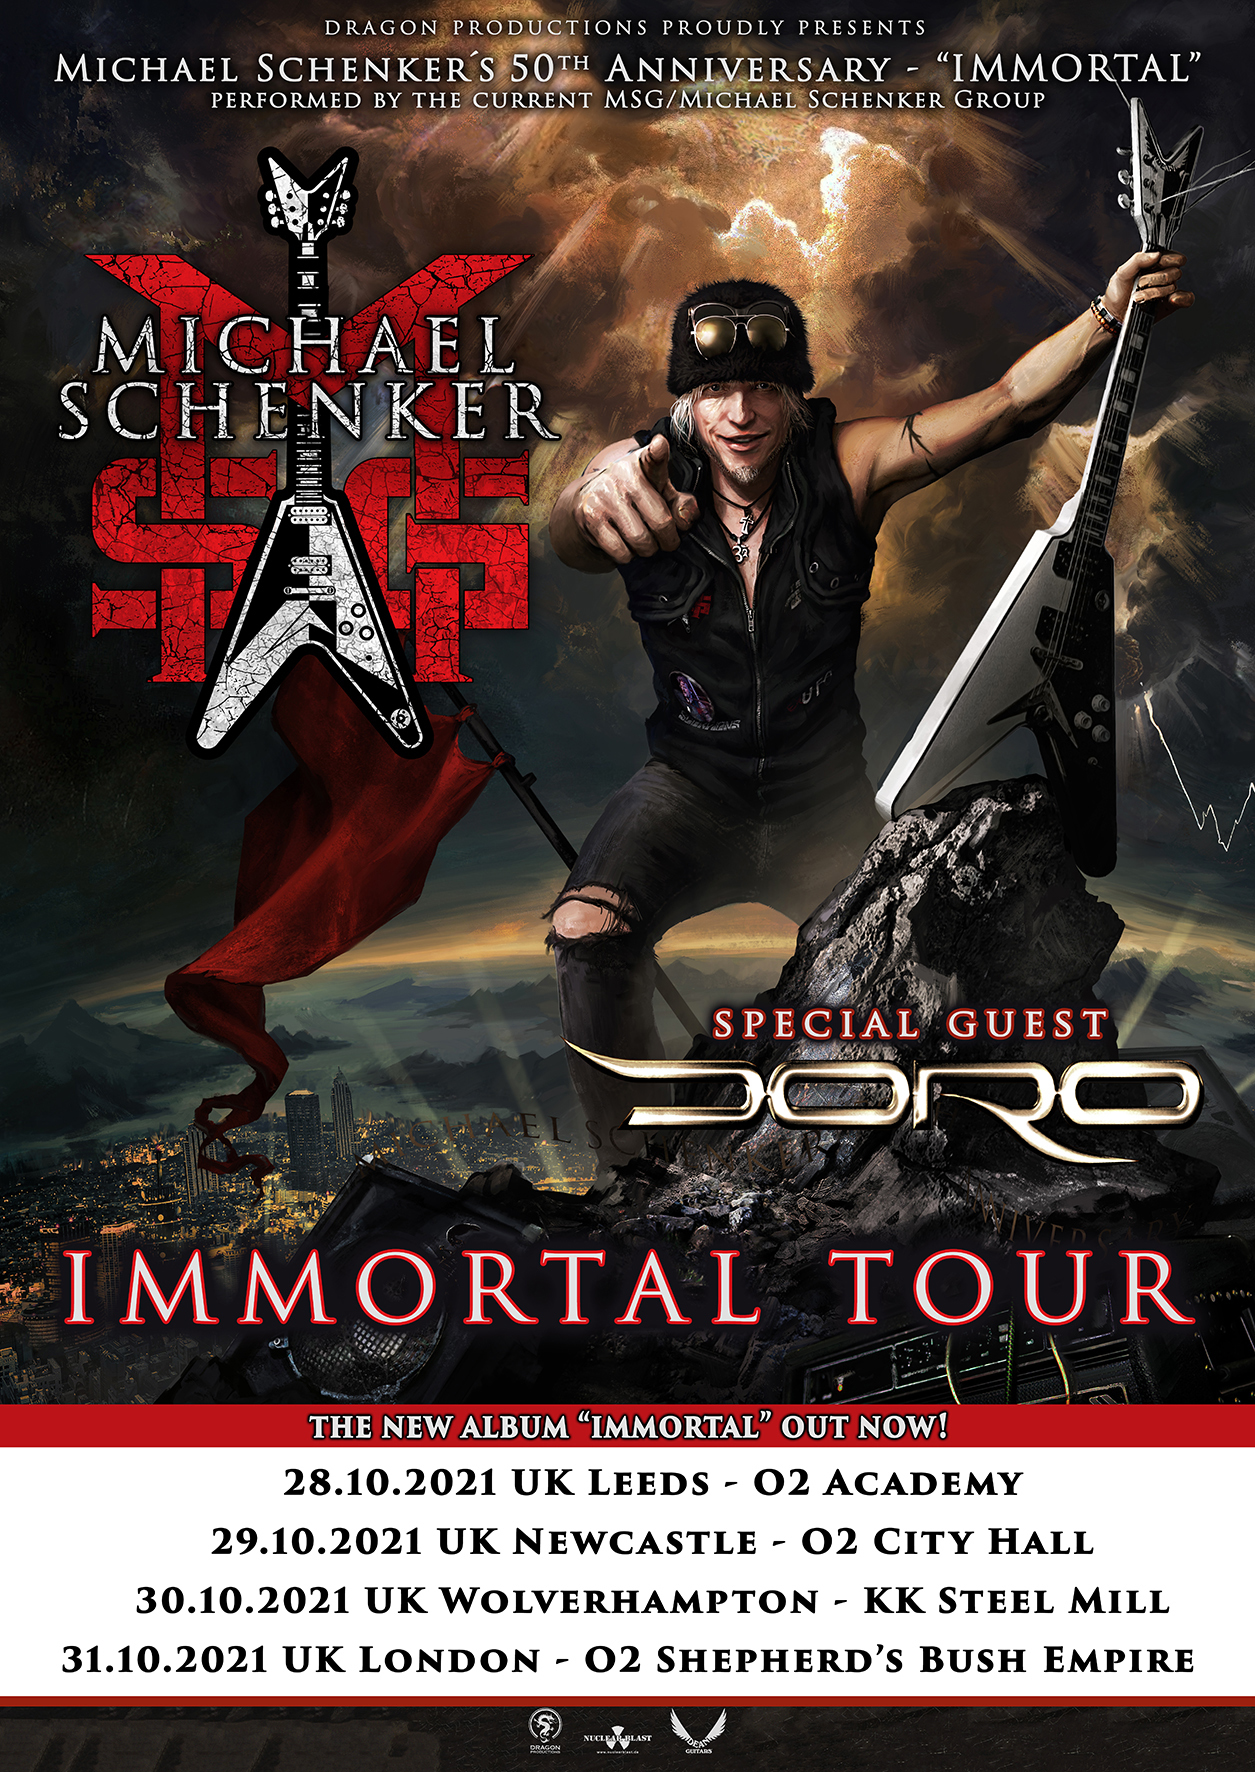 Michael Schenker announces MSG '50th Anniversary Immortal' UK tour